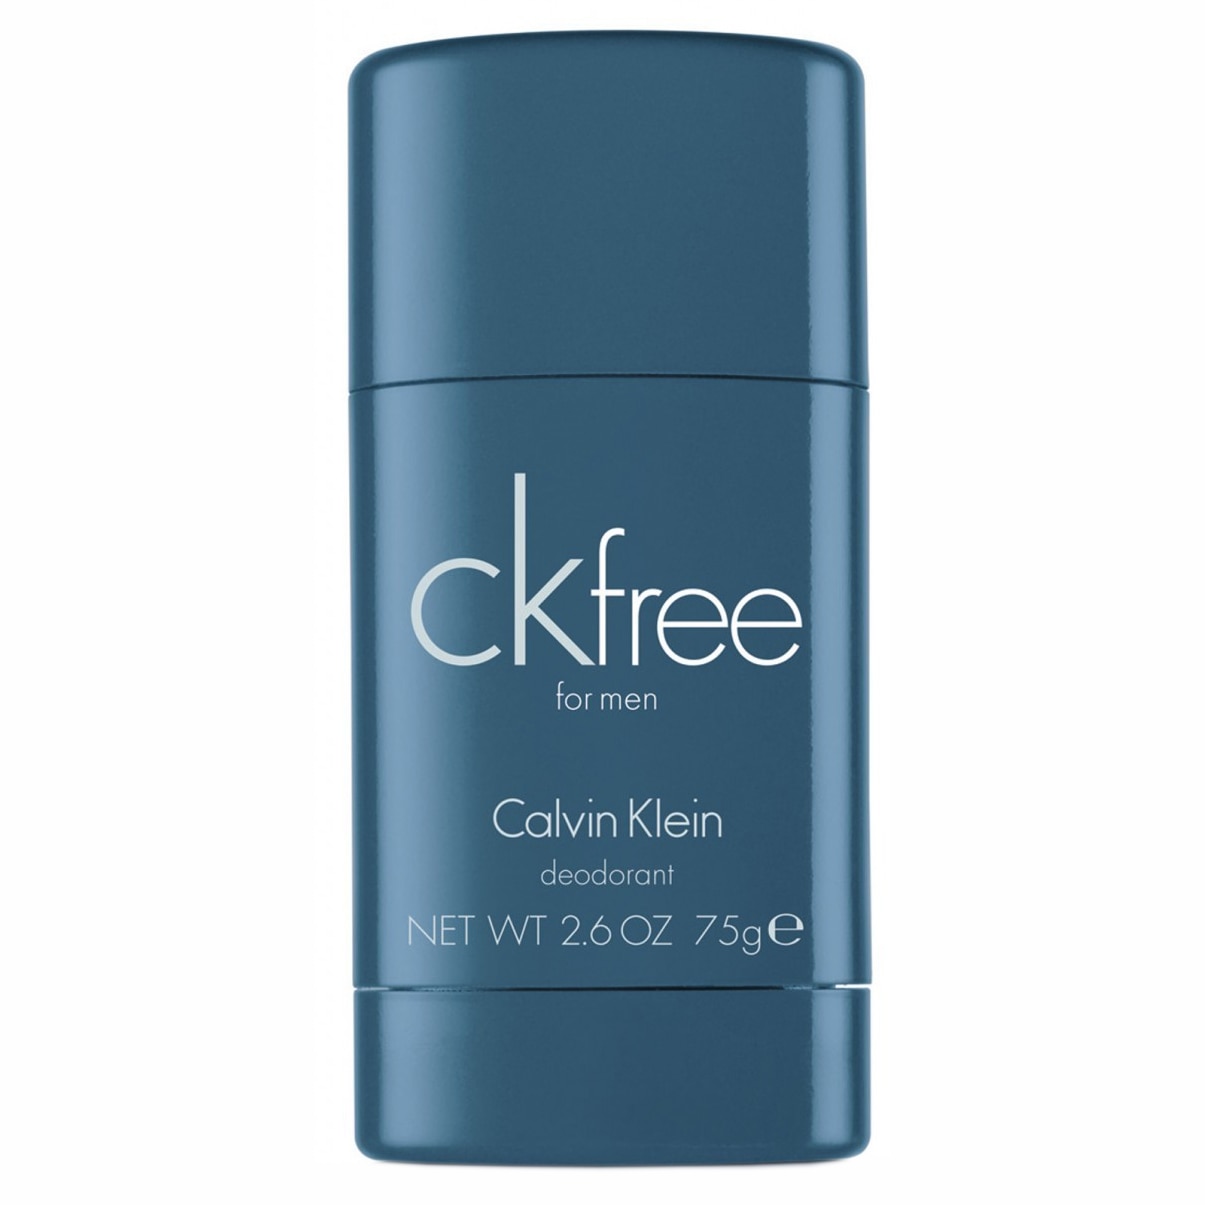 Calvin Klein CK Free férfi deo stift, 75 ml